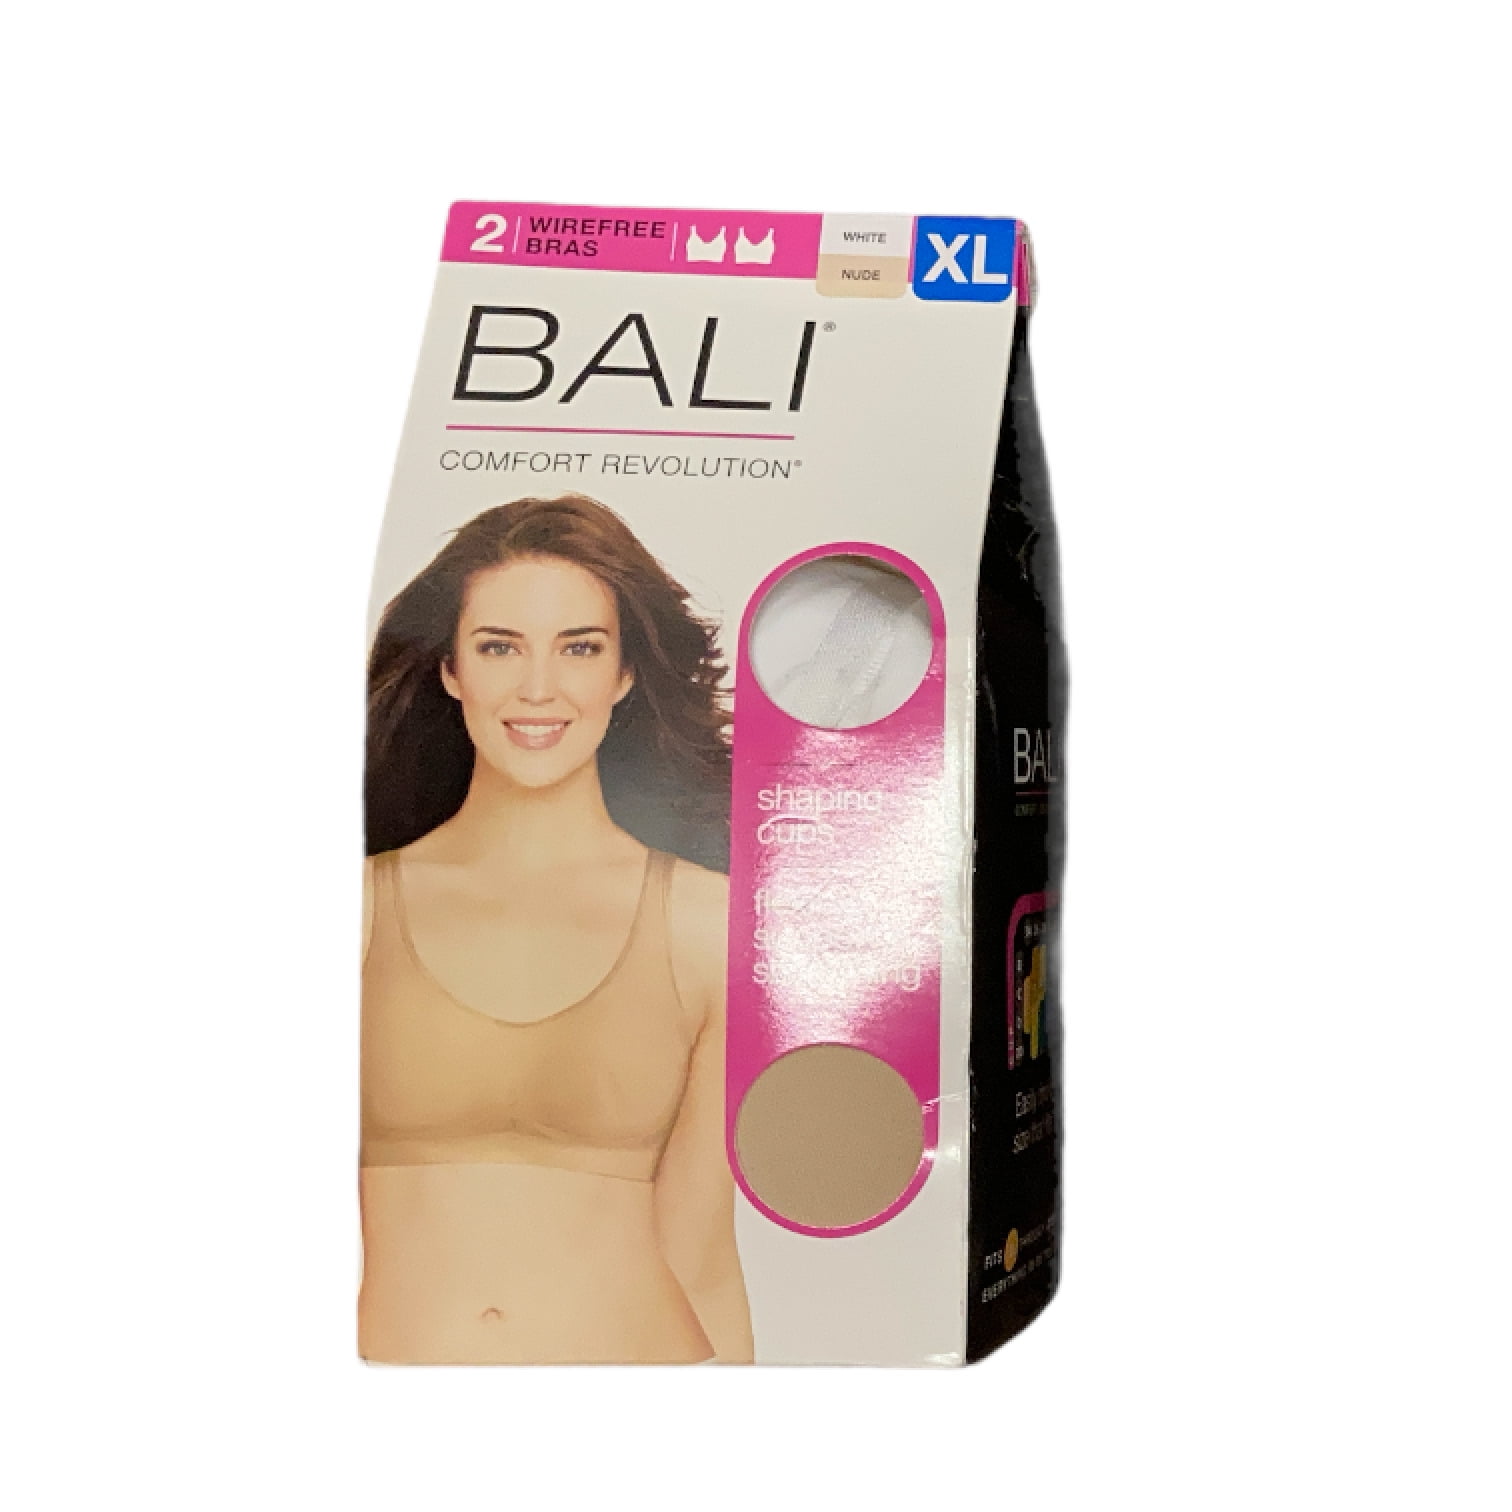 Bali Women's Comfort Revolution Flexible Wireless Shaping Bra, 2 Pack  (White/Nude, M)